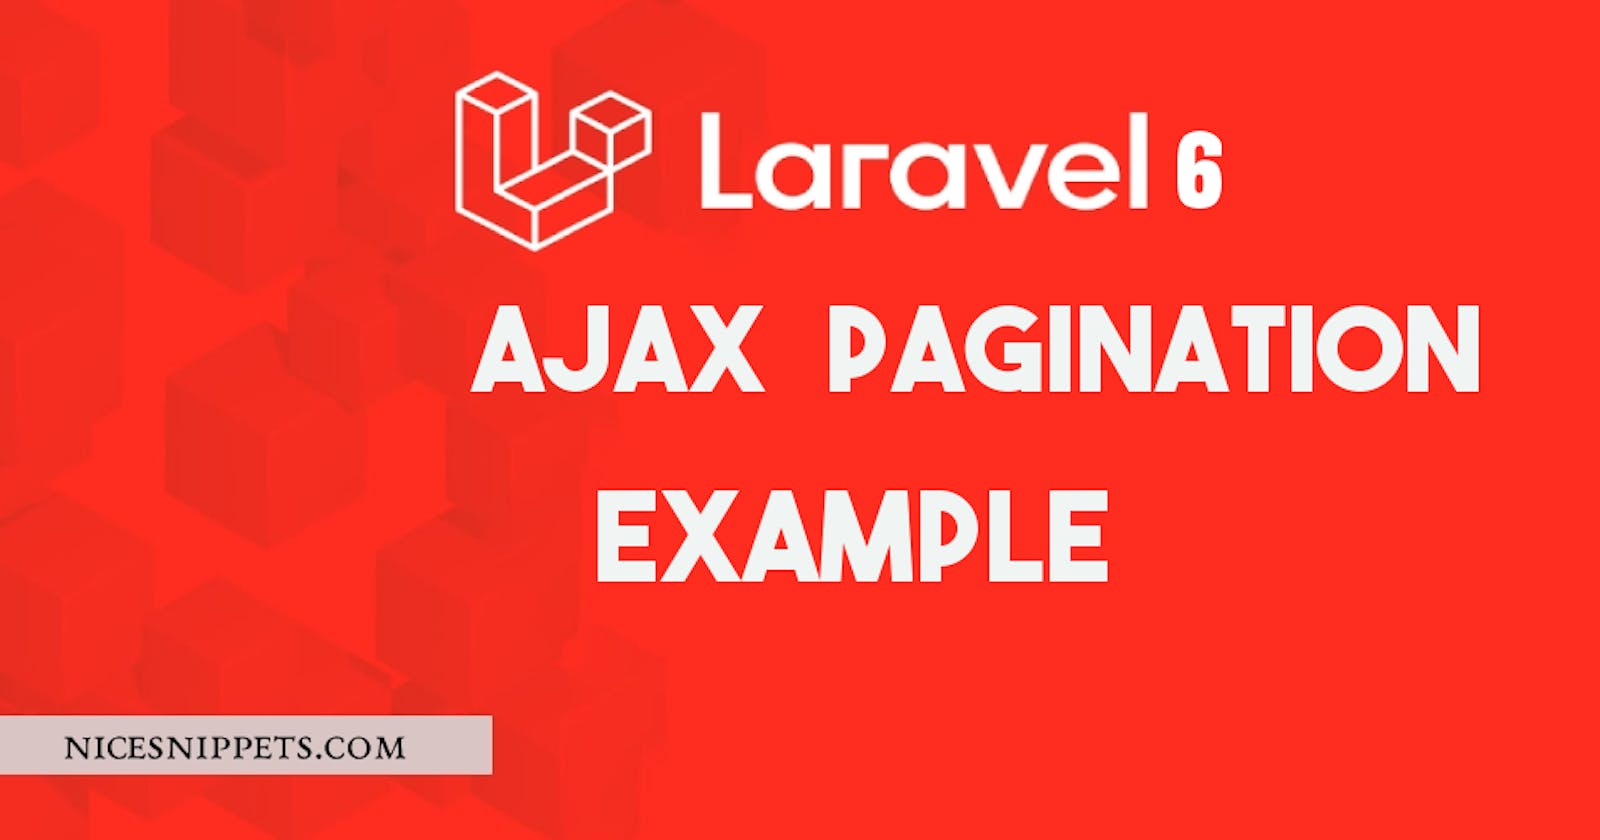 Ajax Pagination in Laravel 6